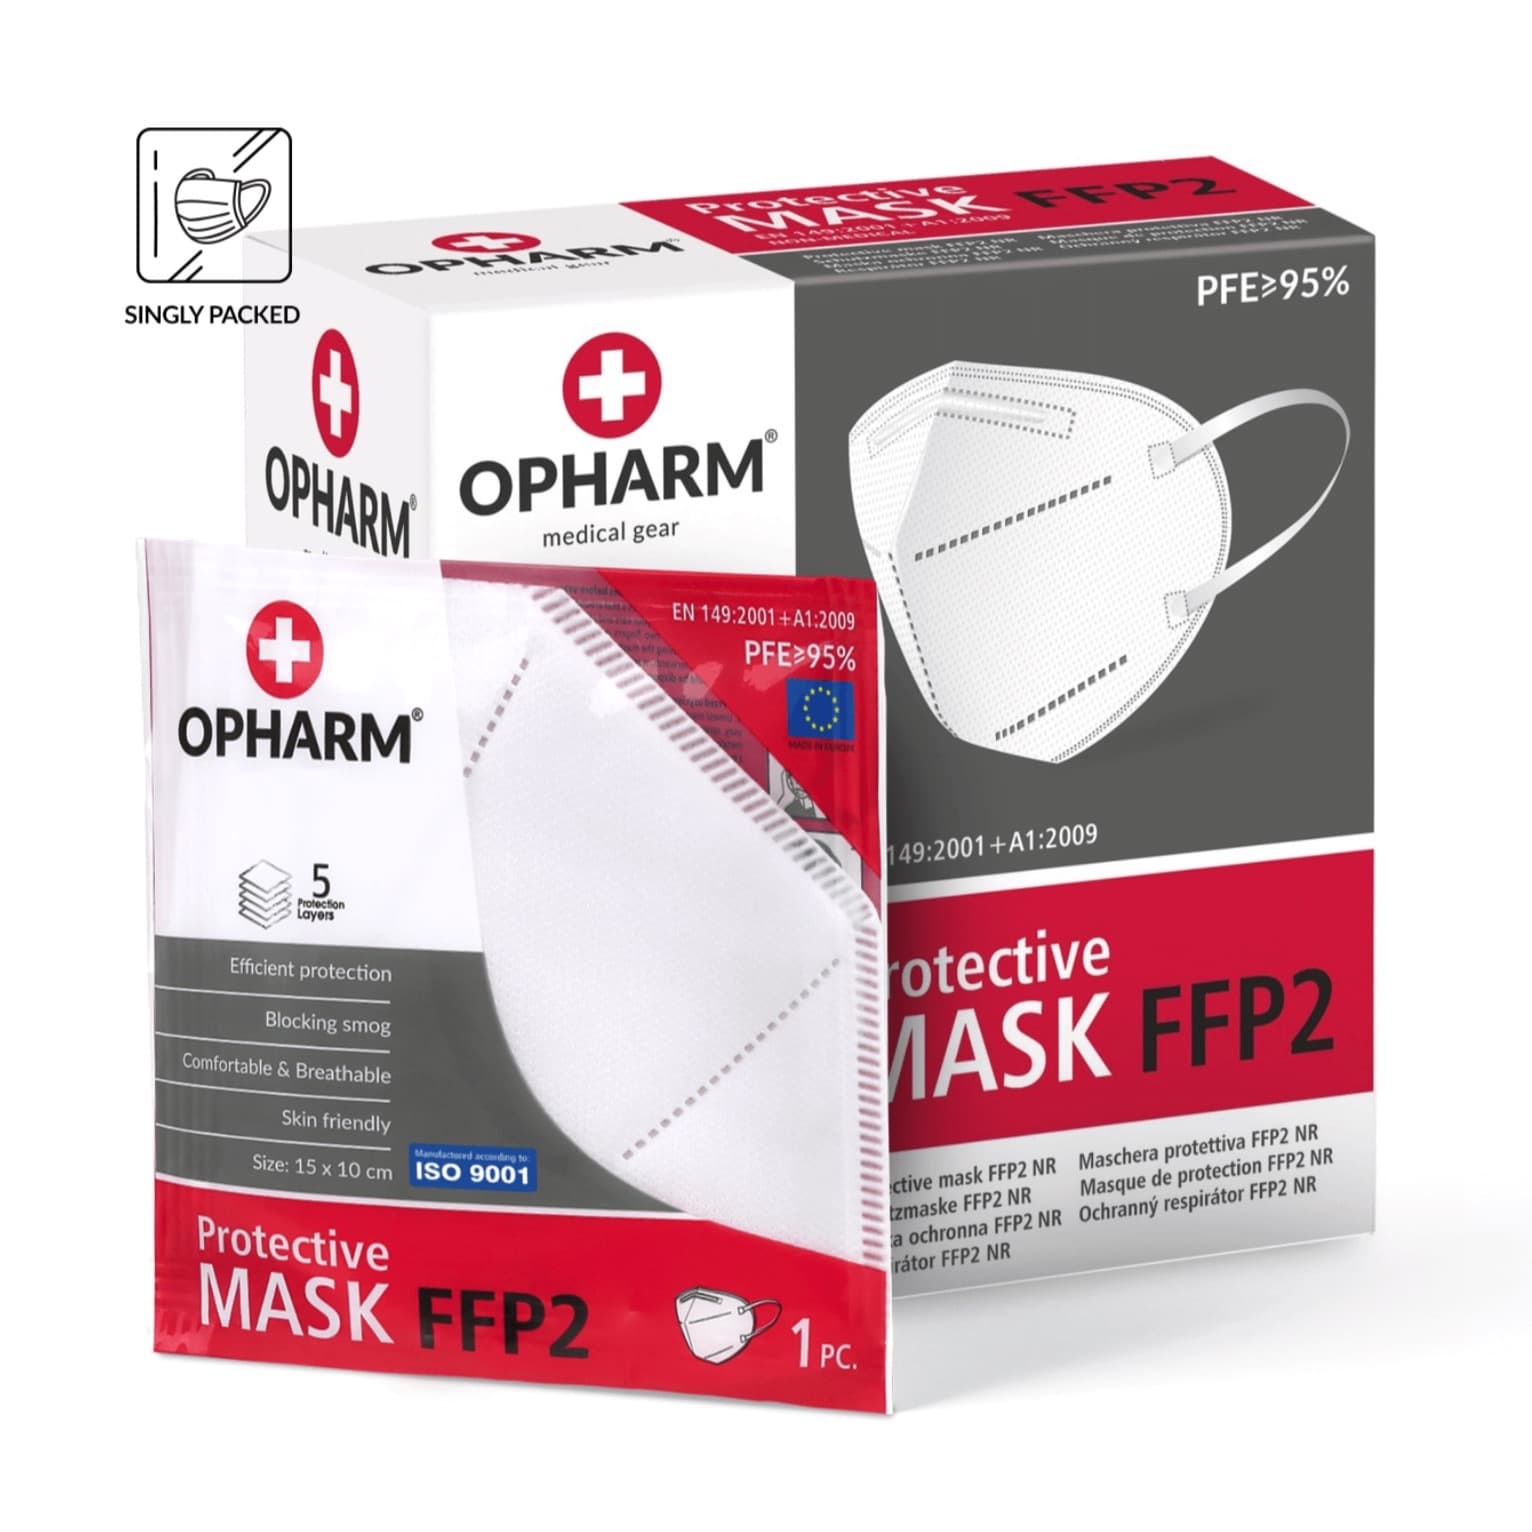 Masques FFP2 emballés individuellement - Mein Arztbedarf